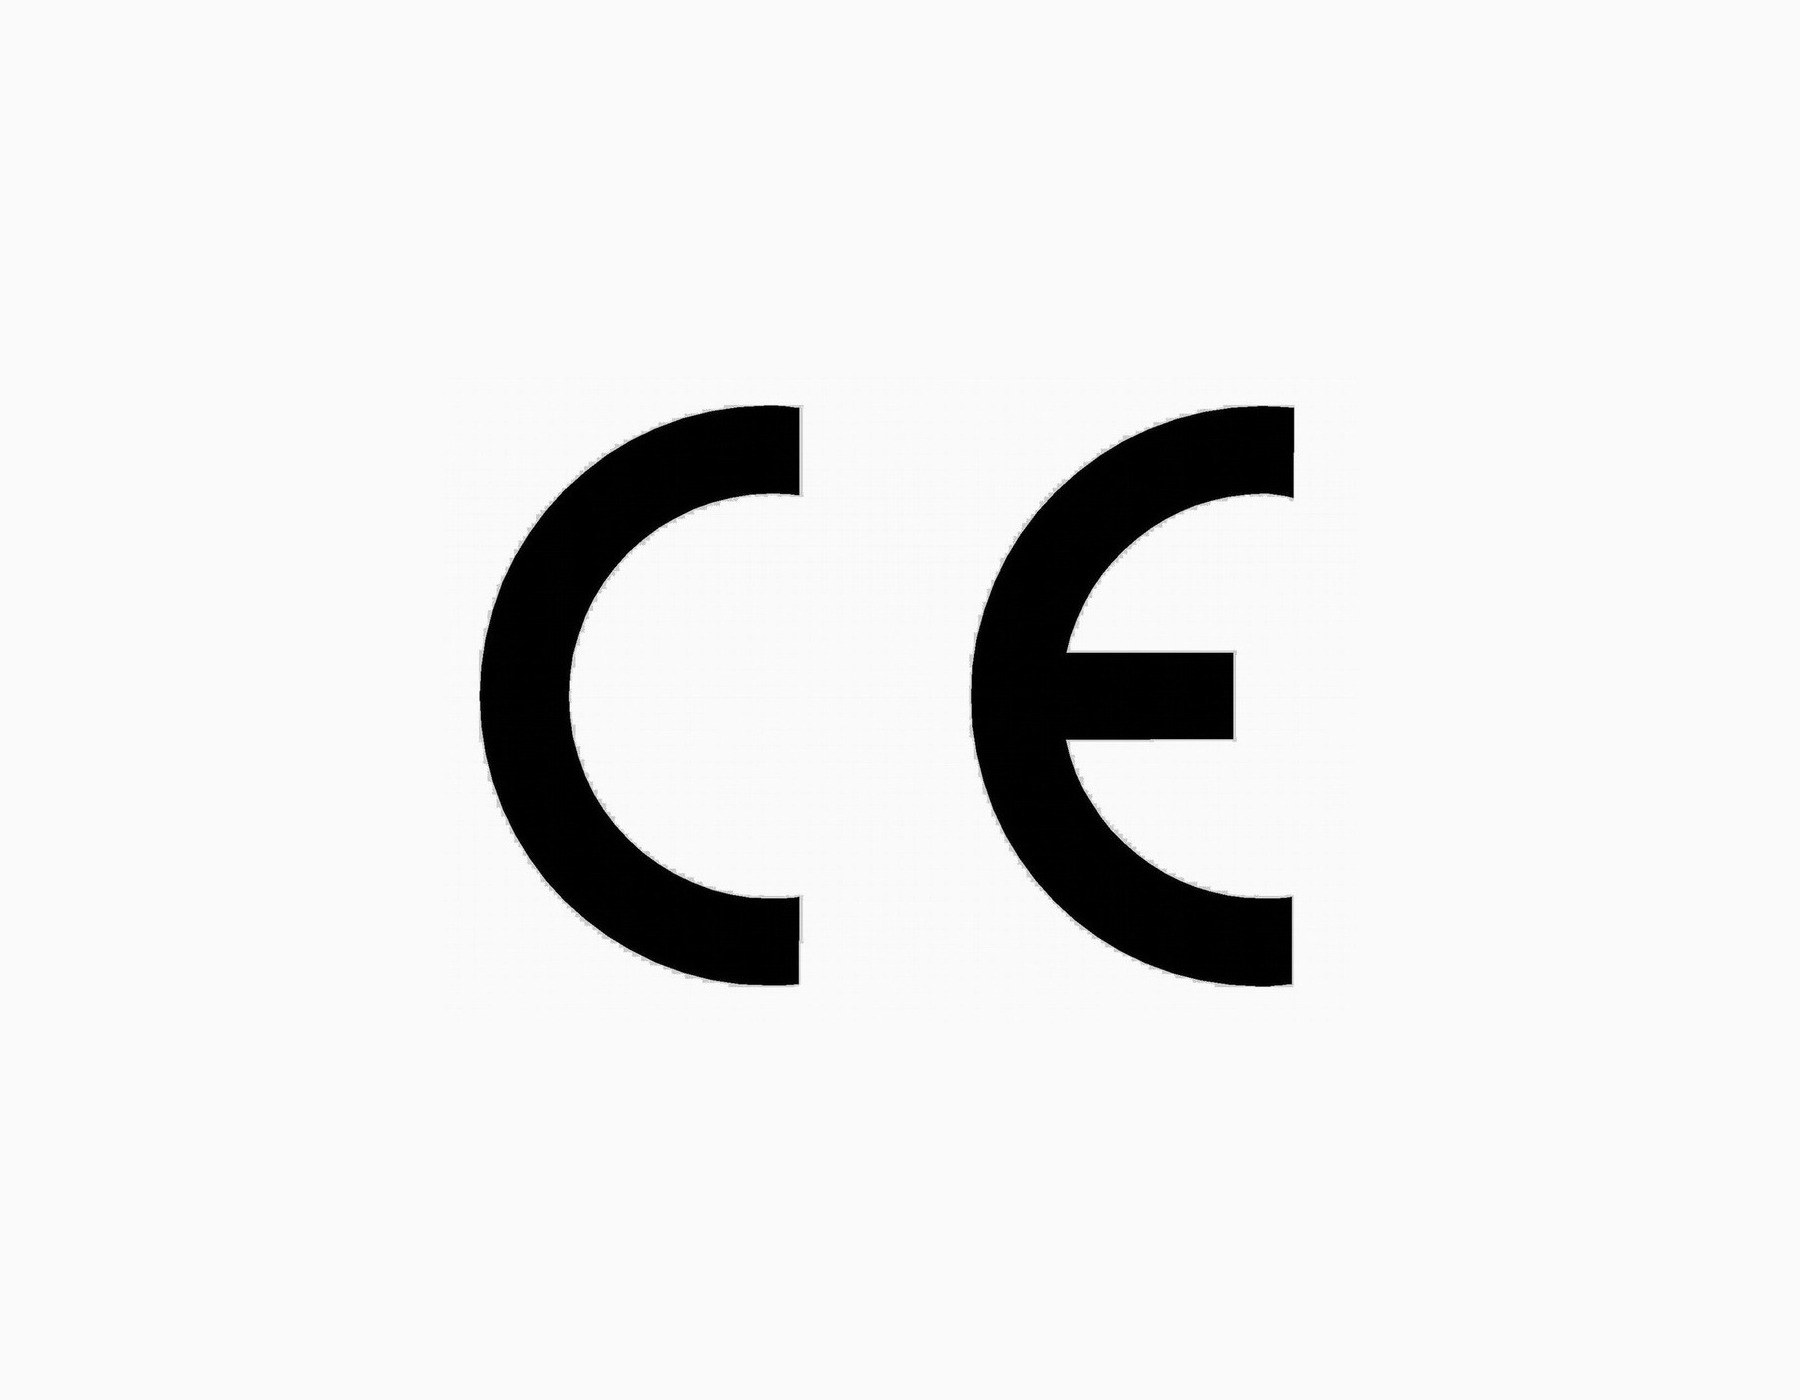 La marca CE